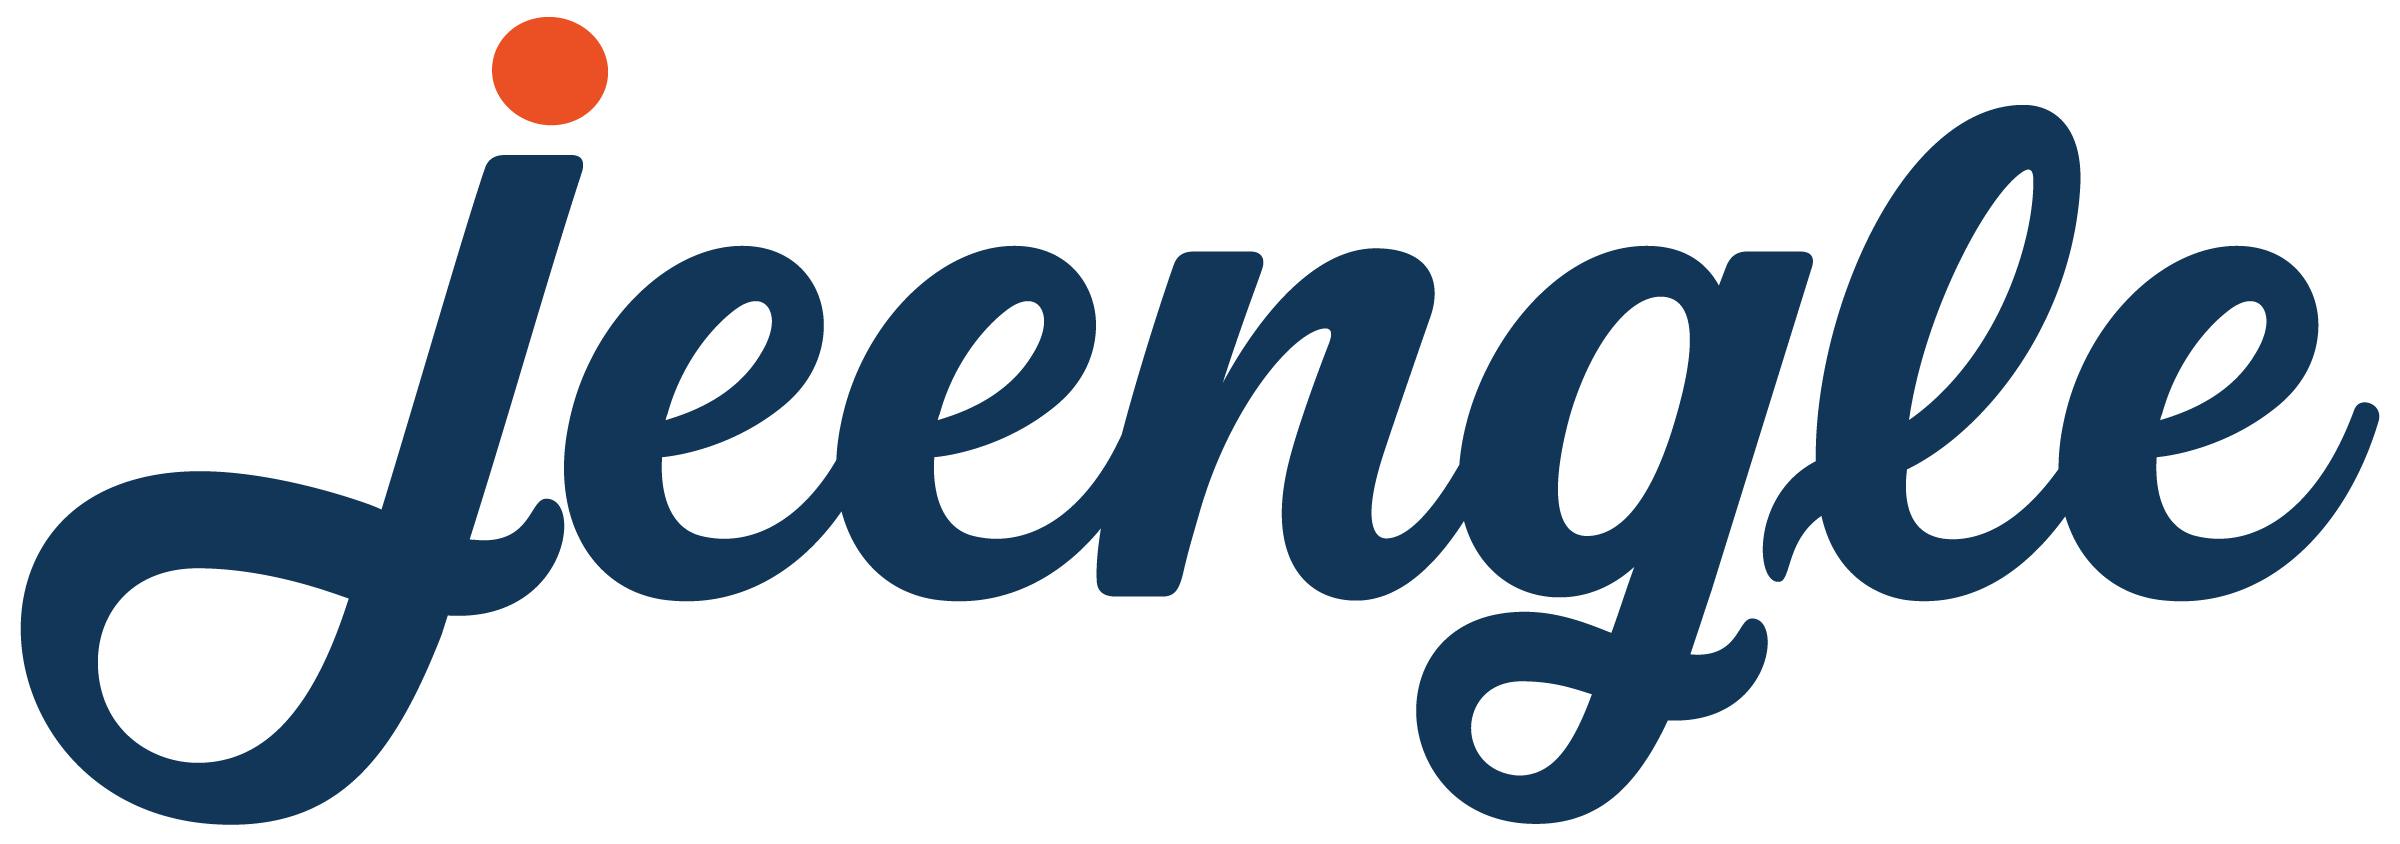 jeengle Logo